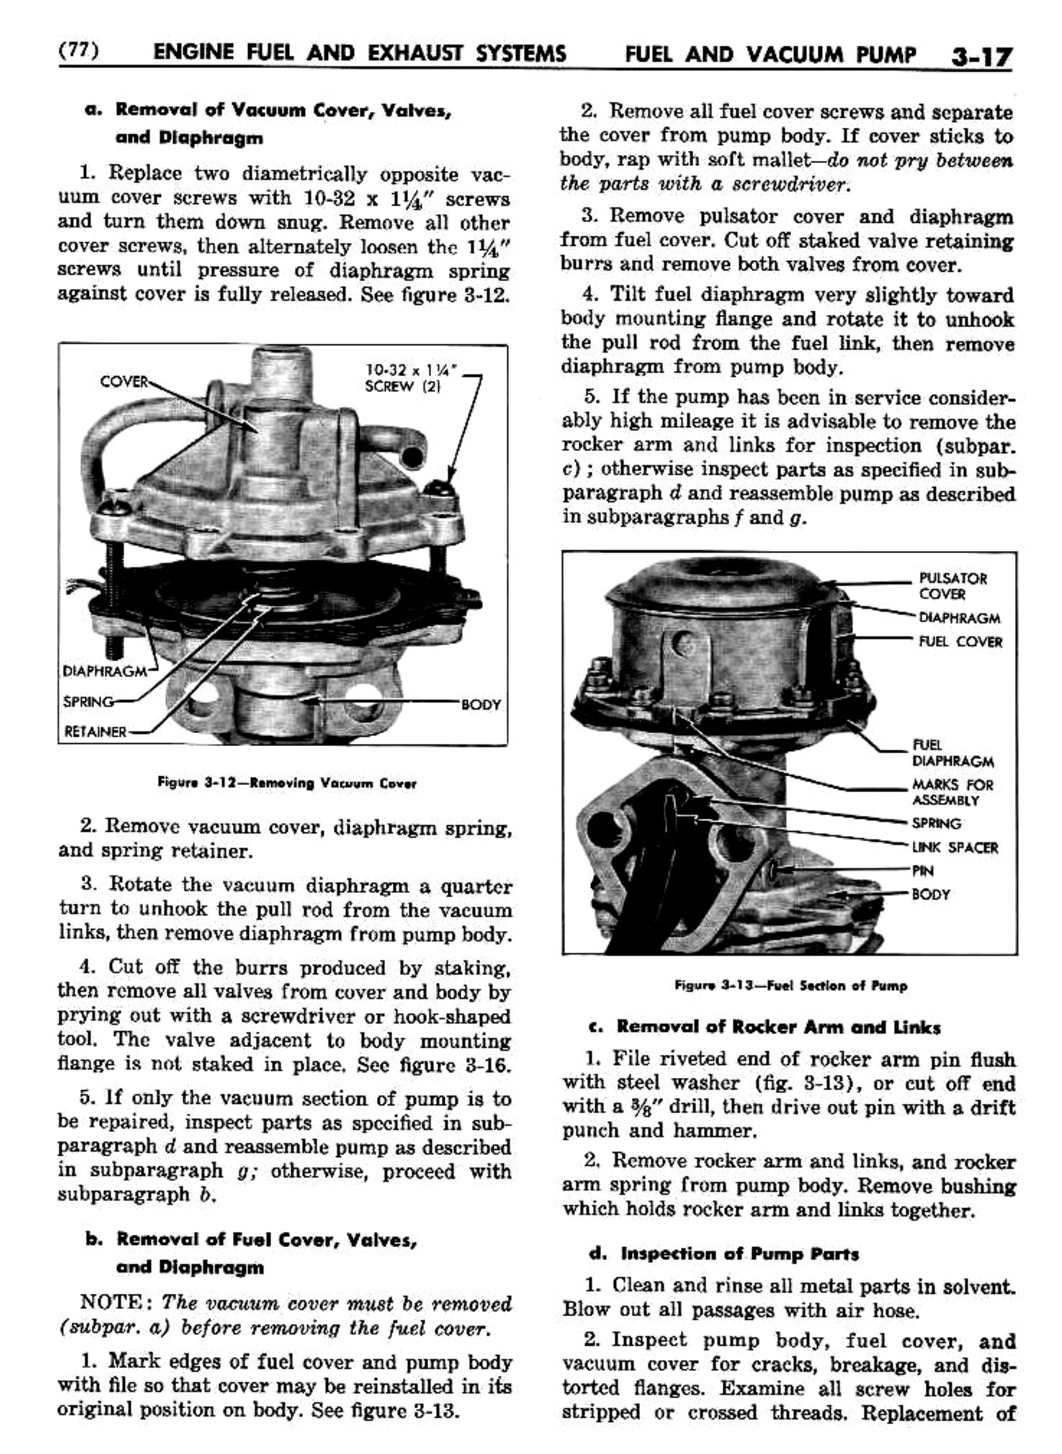 n_04 1956 Buick Shop Manual - Engine Fuel & Exhaust-017-017.jpg